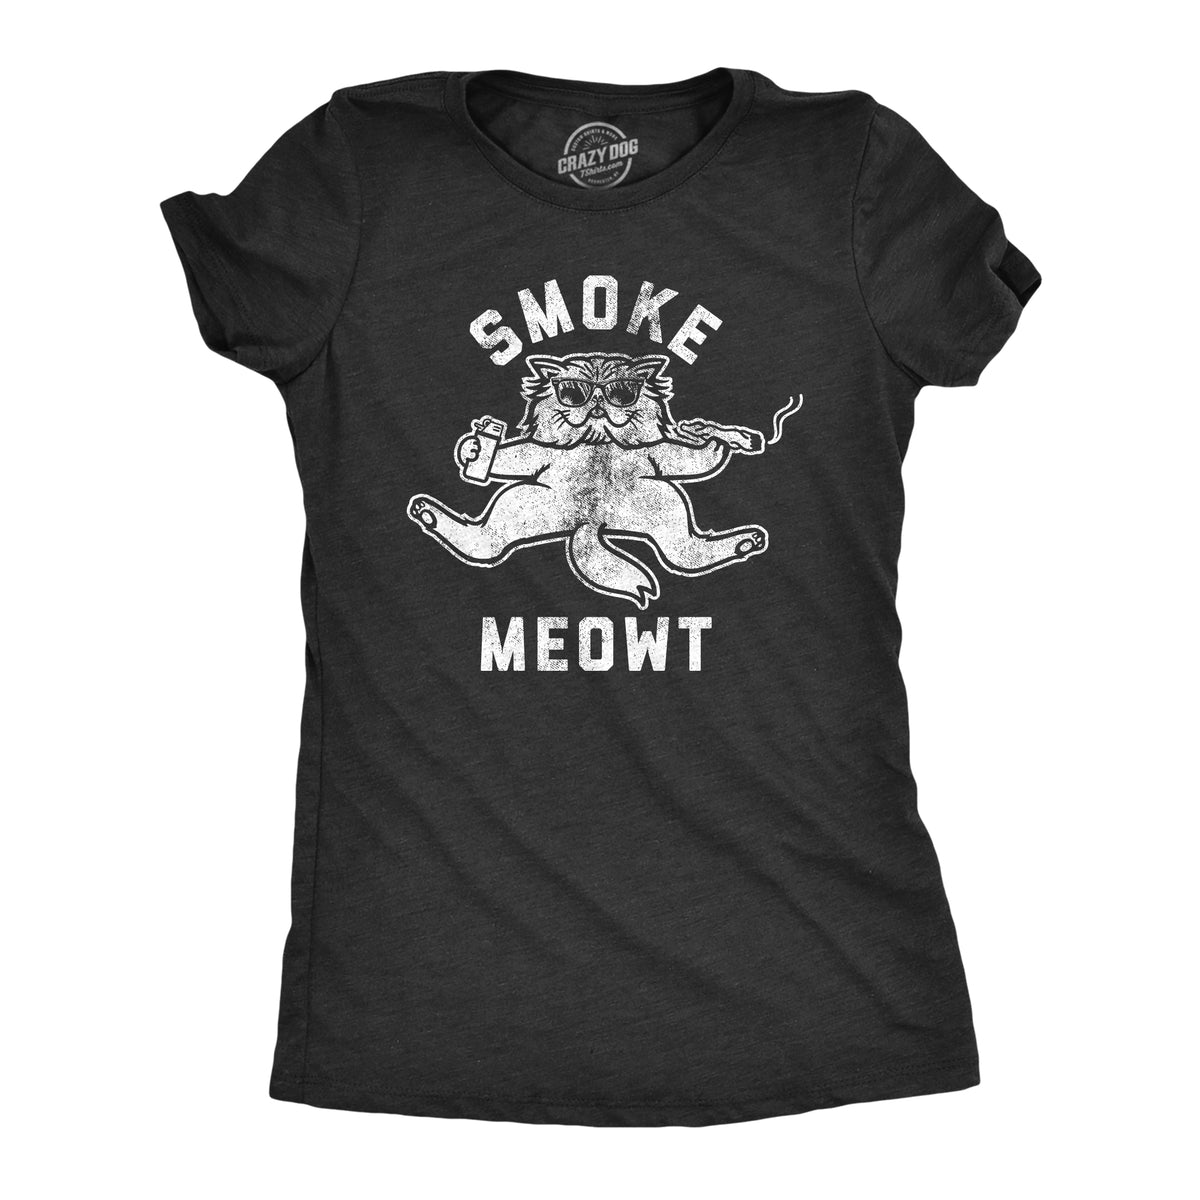 Funny Heather Black Smoke Meowt Womens T Shirt Nerdy 420 Cat Tee